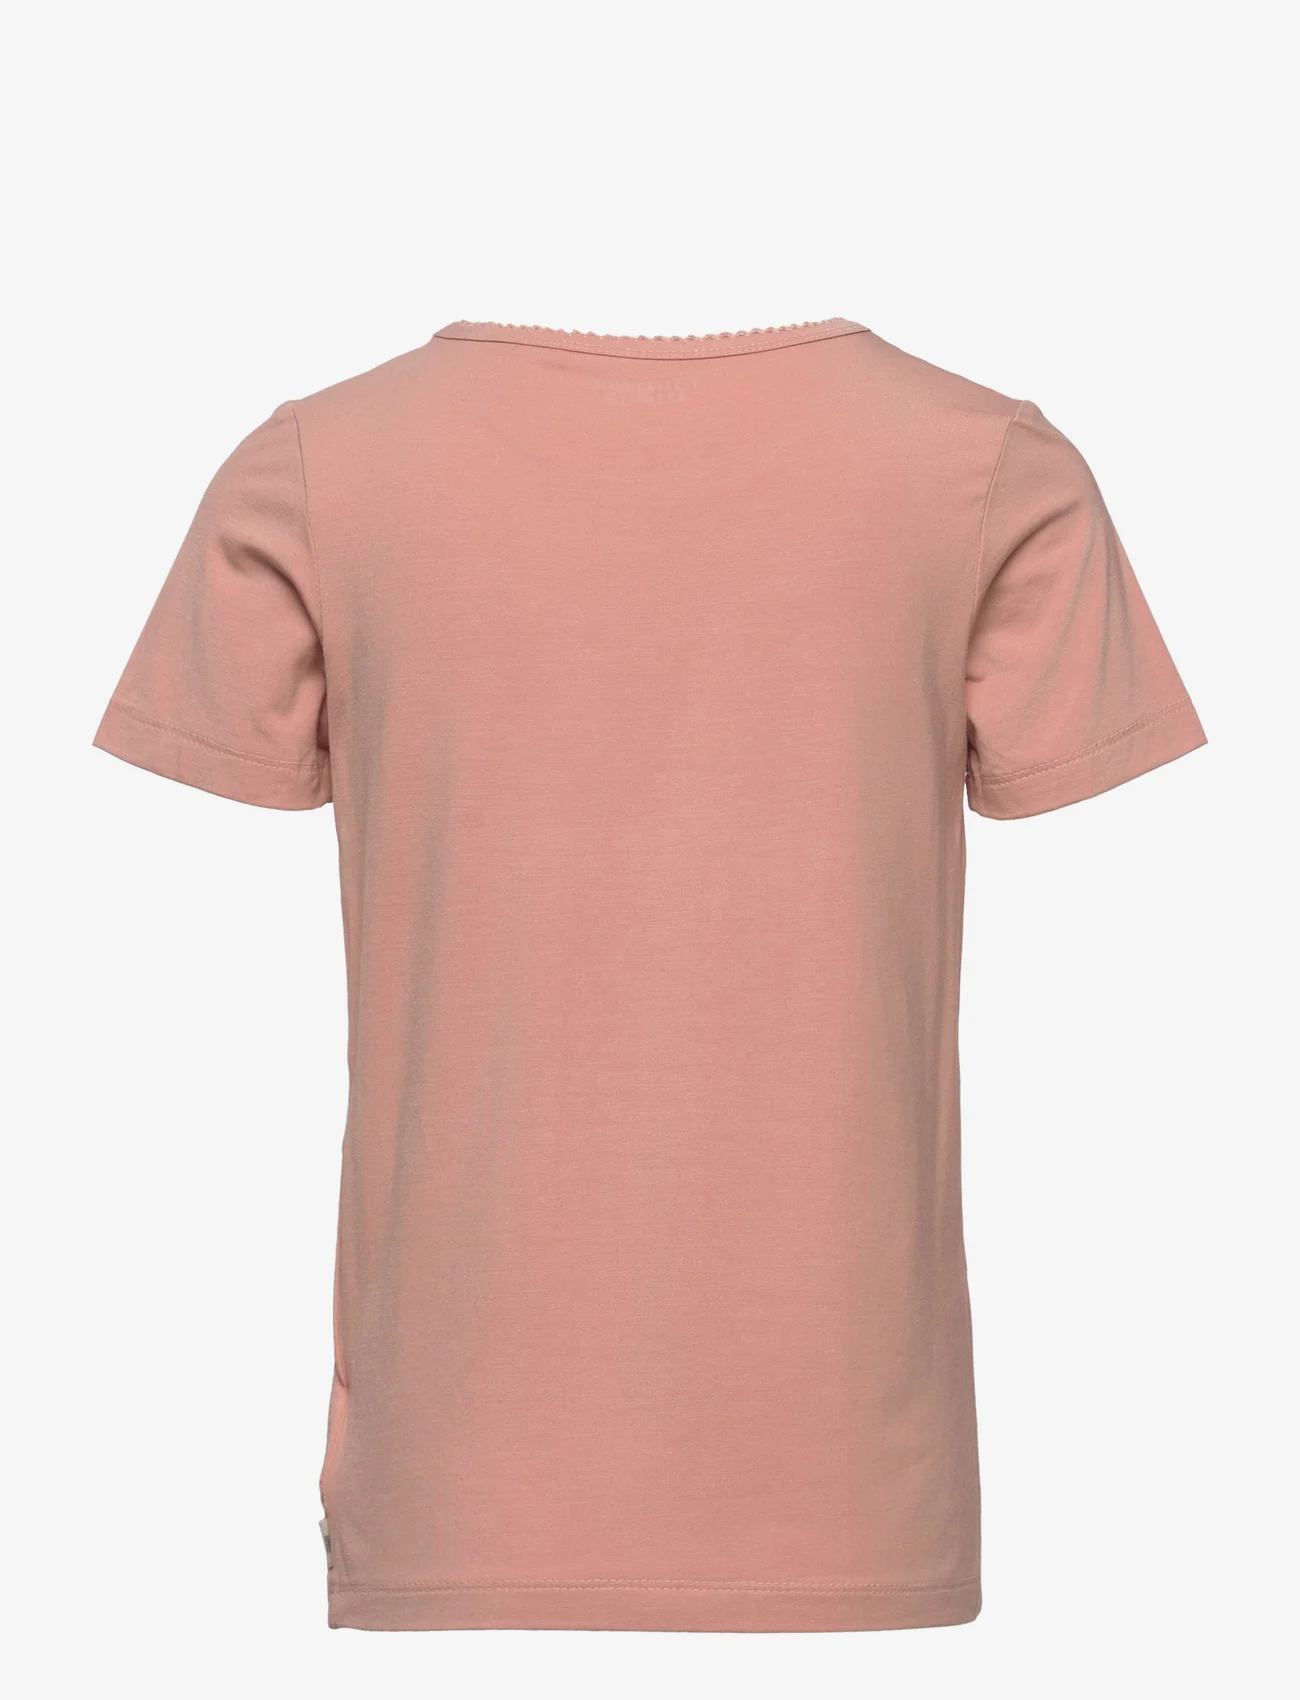 Minymo - Blouse SS - Bamboo - kortærmede t-shirts - misty rose - 1